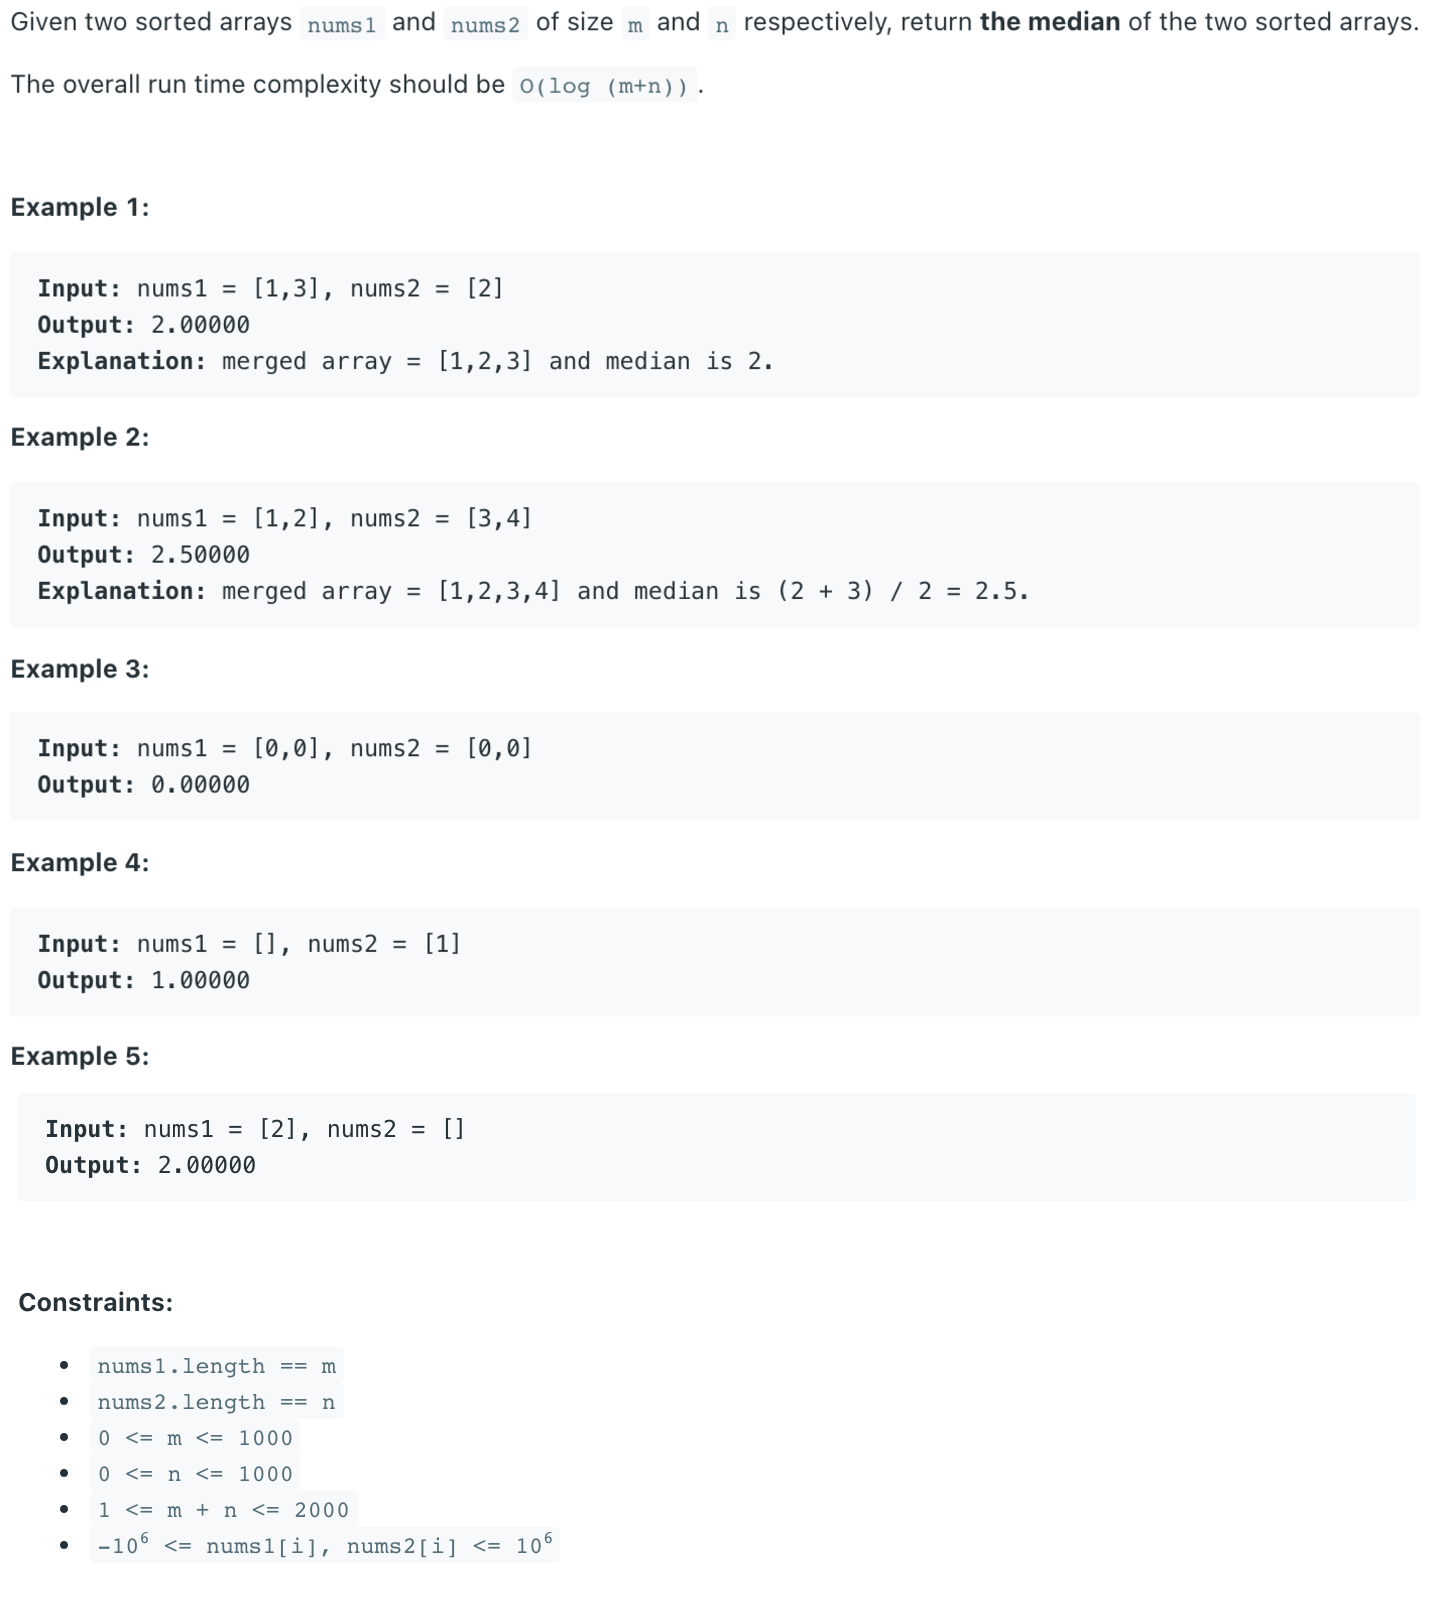 https://leetcode.com/problems/median-of-two-sorted-arrays